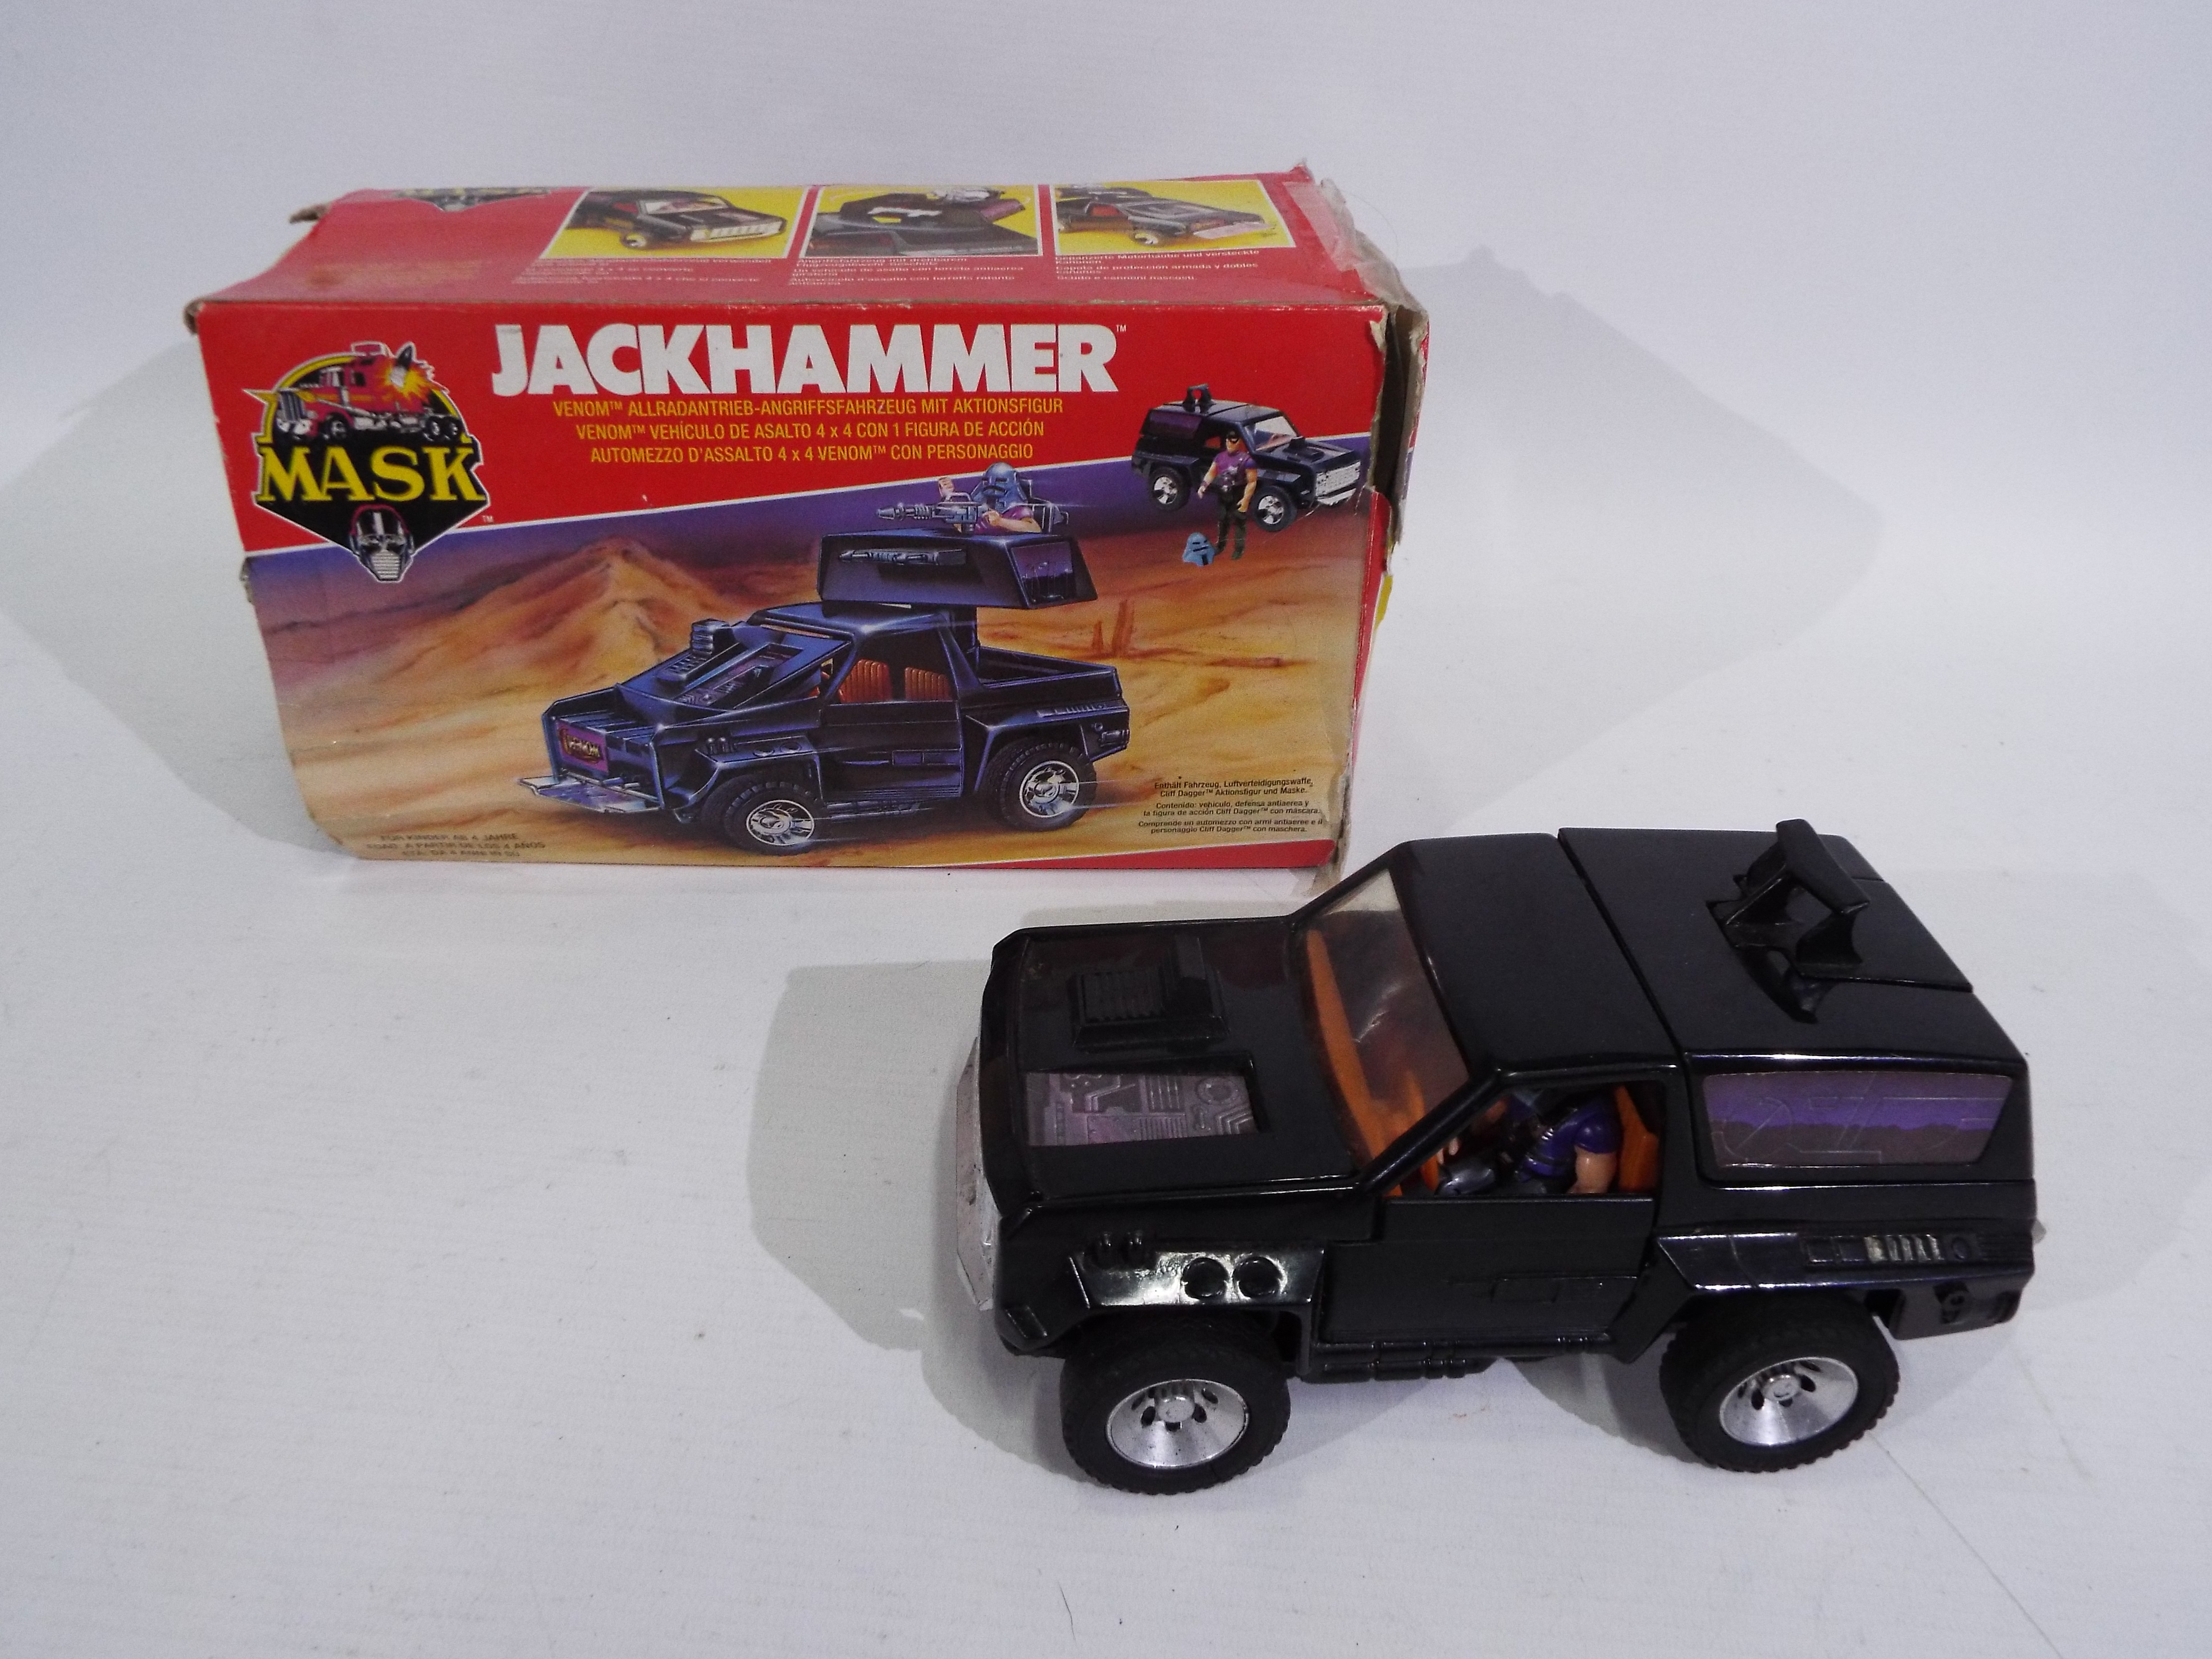 MASK - Kenner - Jackhammer. A boxed Mask 'Jackhammer' from 1987.